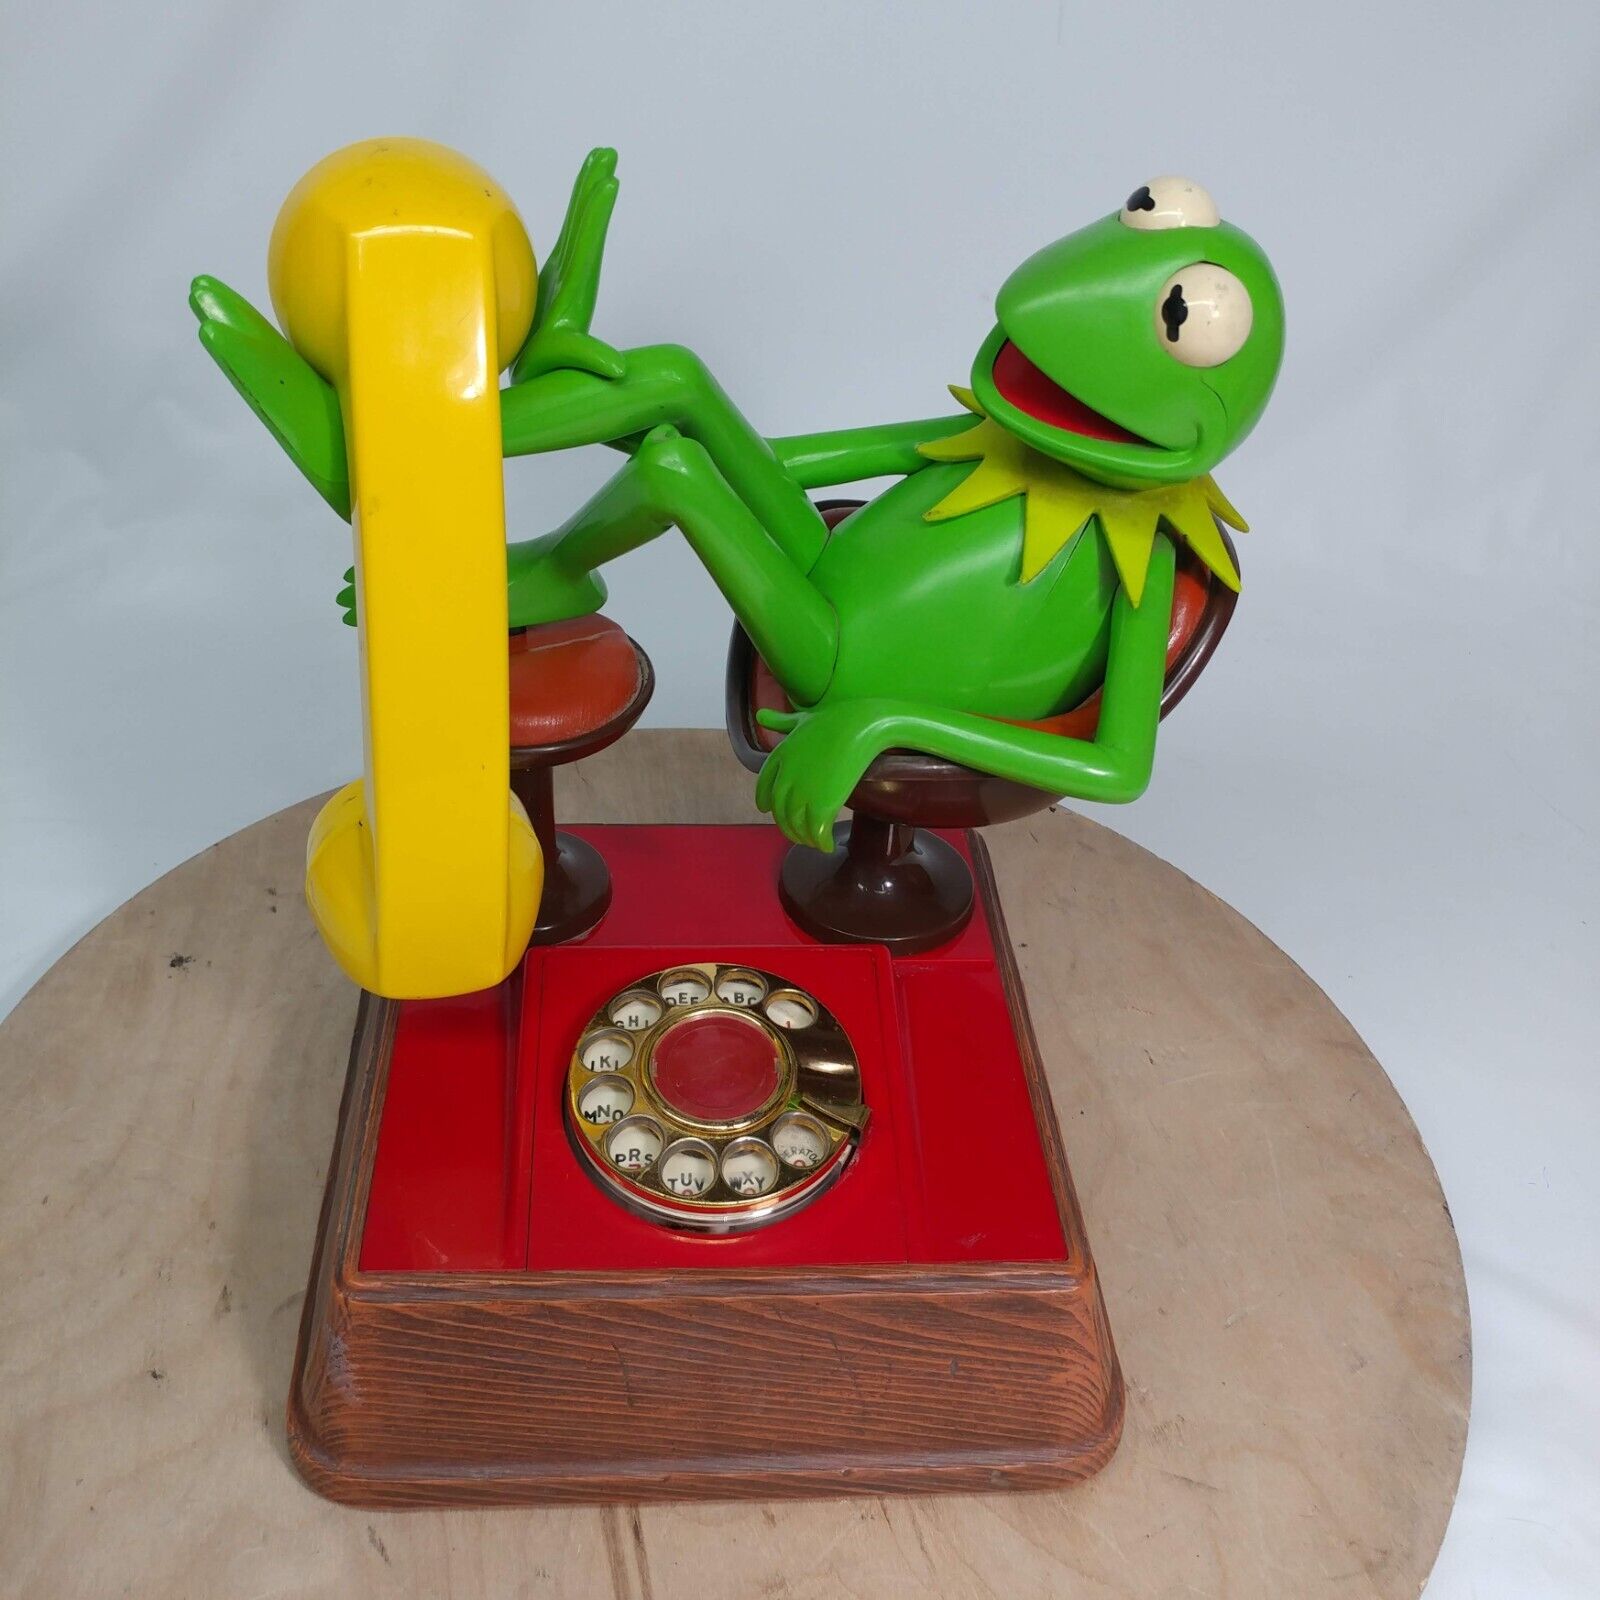 Vintage Kermit the Frog Phone 1983 Jim Henson Manual Rotary Telephone UNTESTED